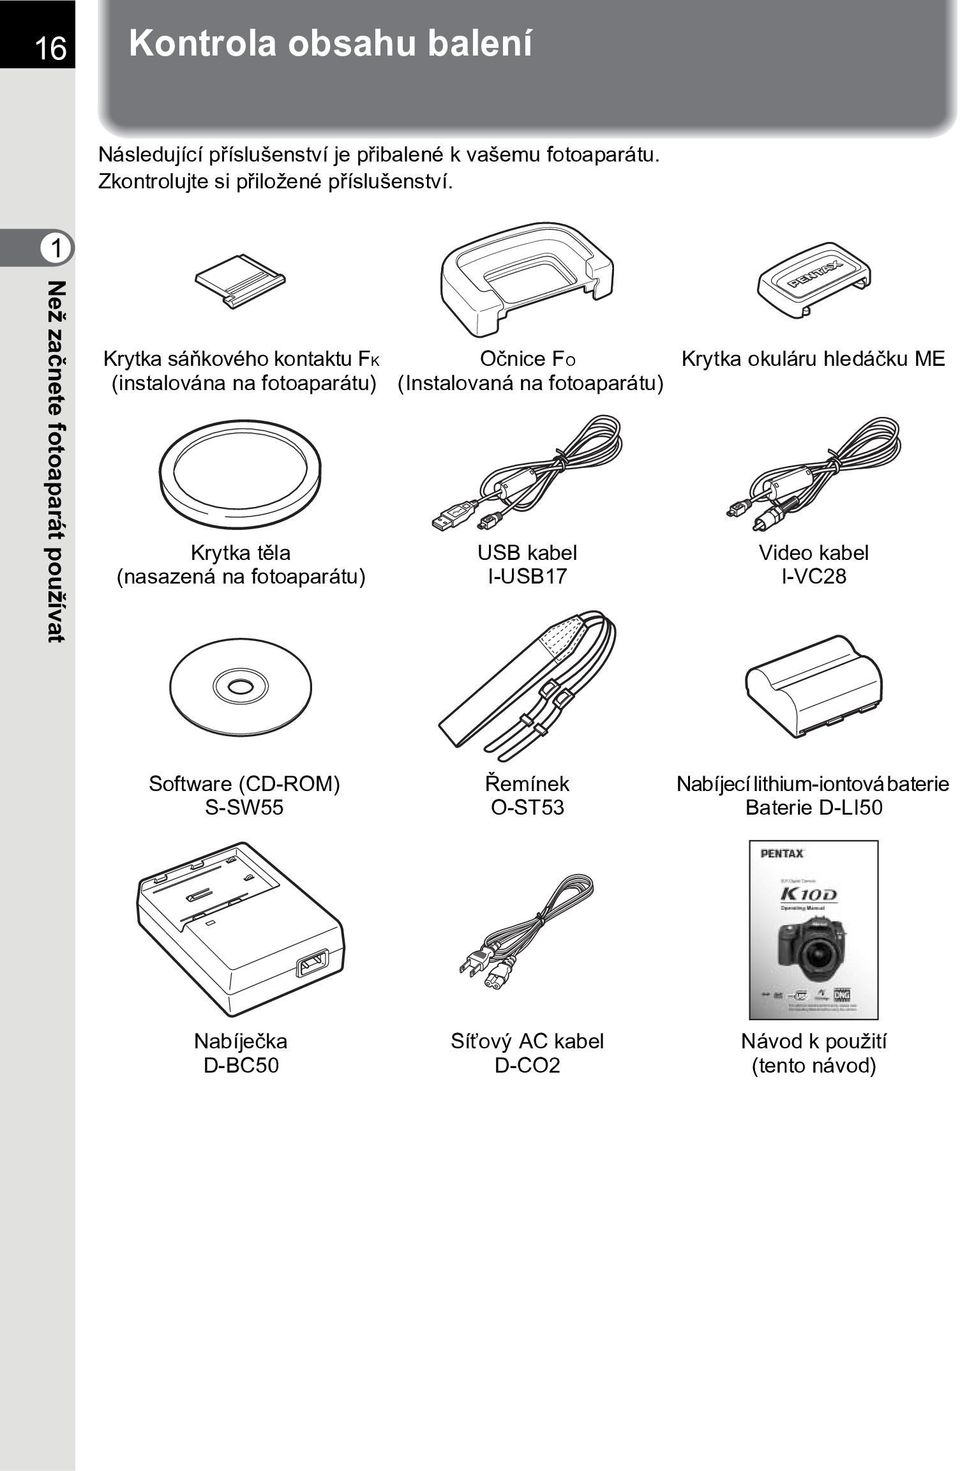 Oènice FO (Instalovaná na fotoaparátu) USB kabel I-USB17 Krytka okuláru hledáèku ME Video kabel I-VC28 Software (CD-ROM) S-SW55